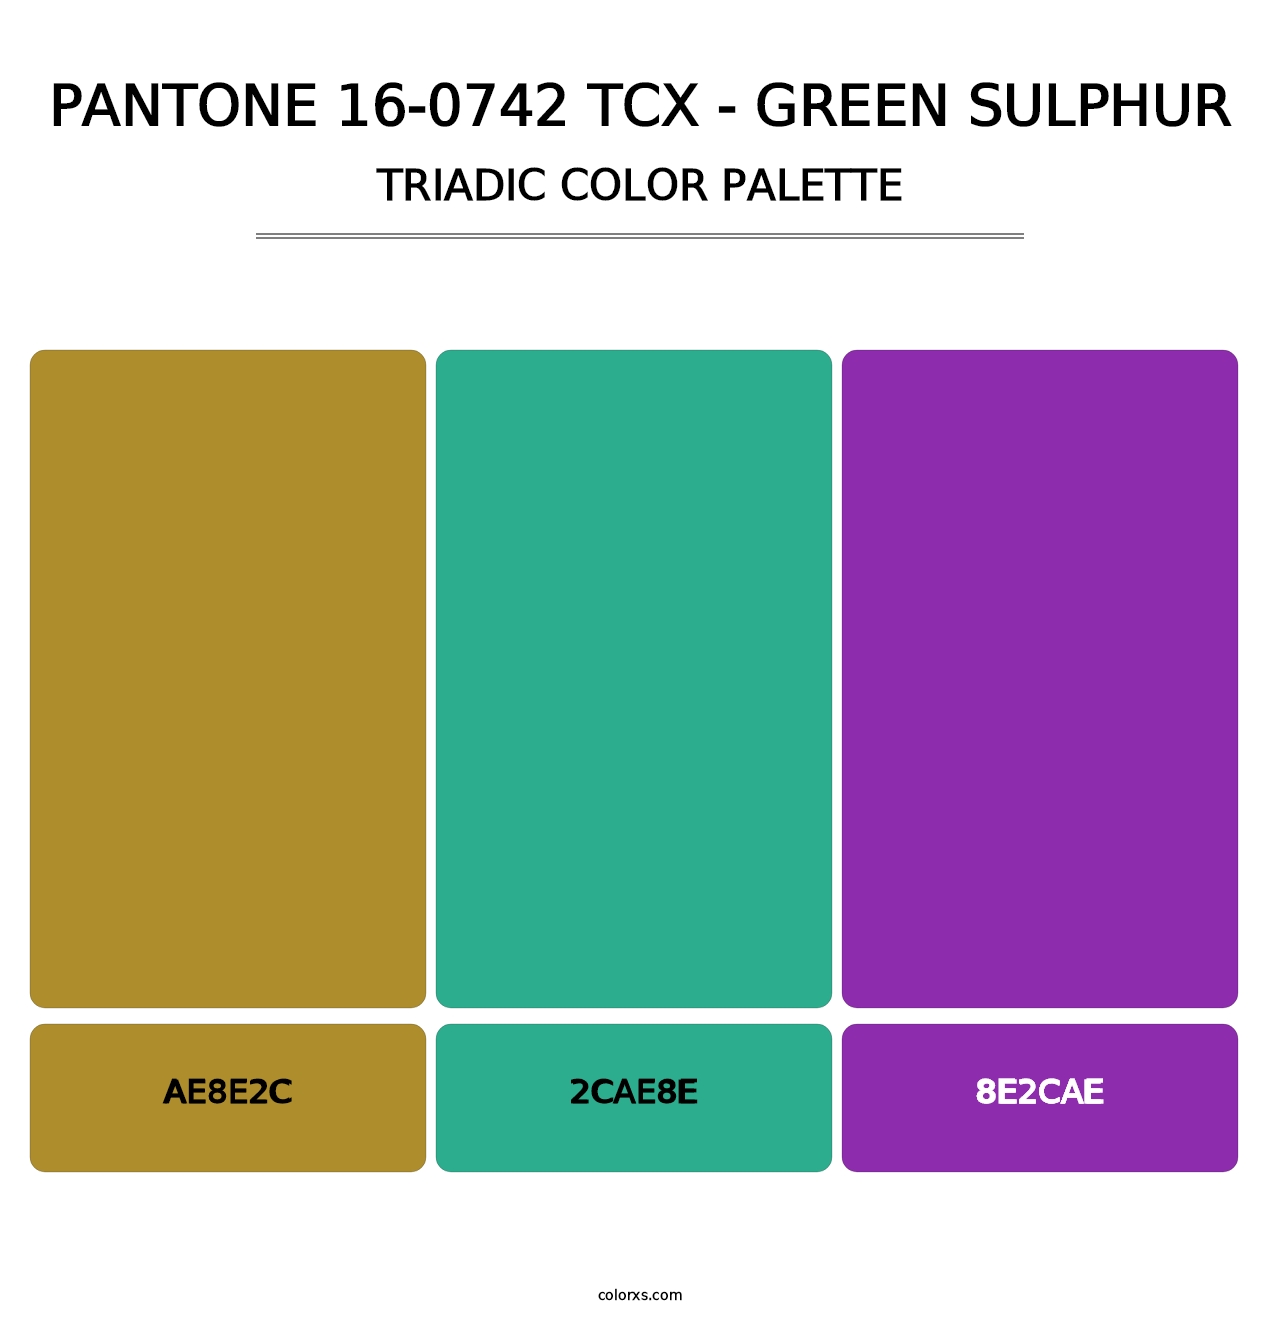 PANTONE 16-0742 TCX - Green Sulphur - Triadic Color Palette